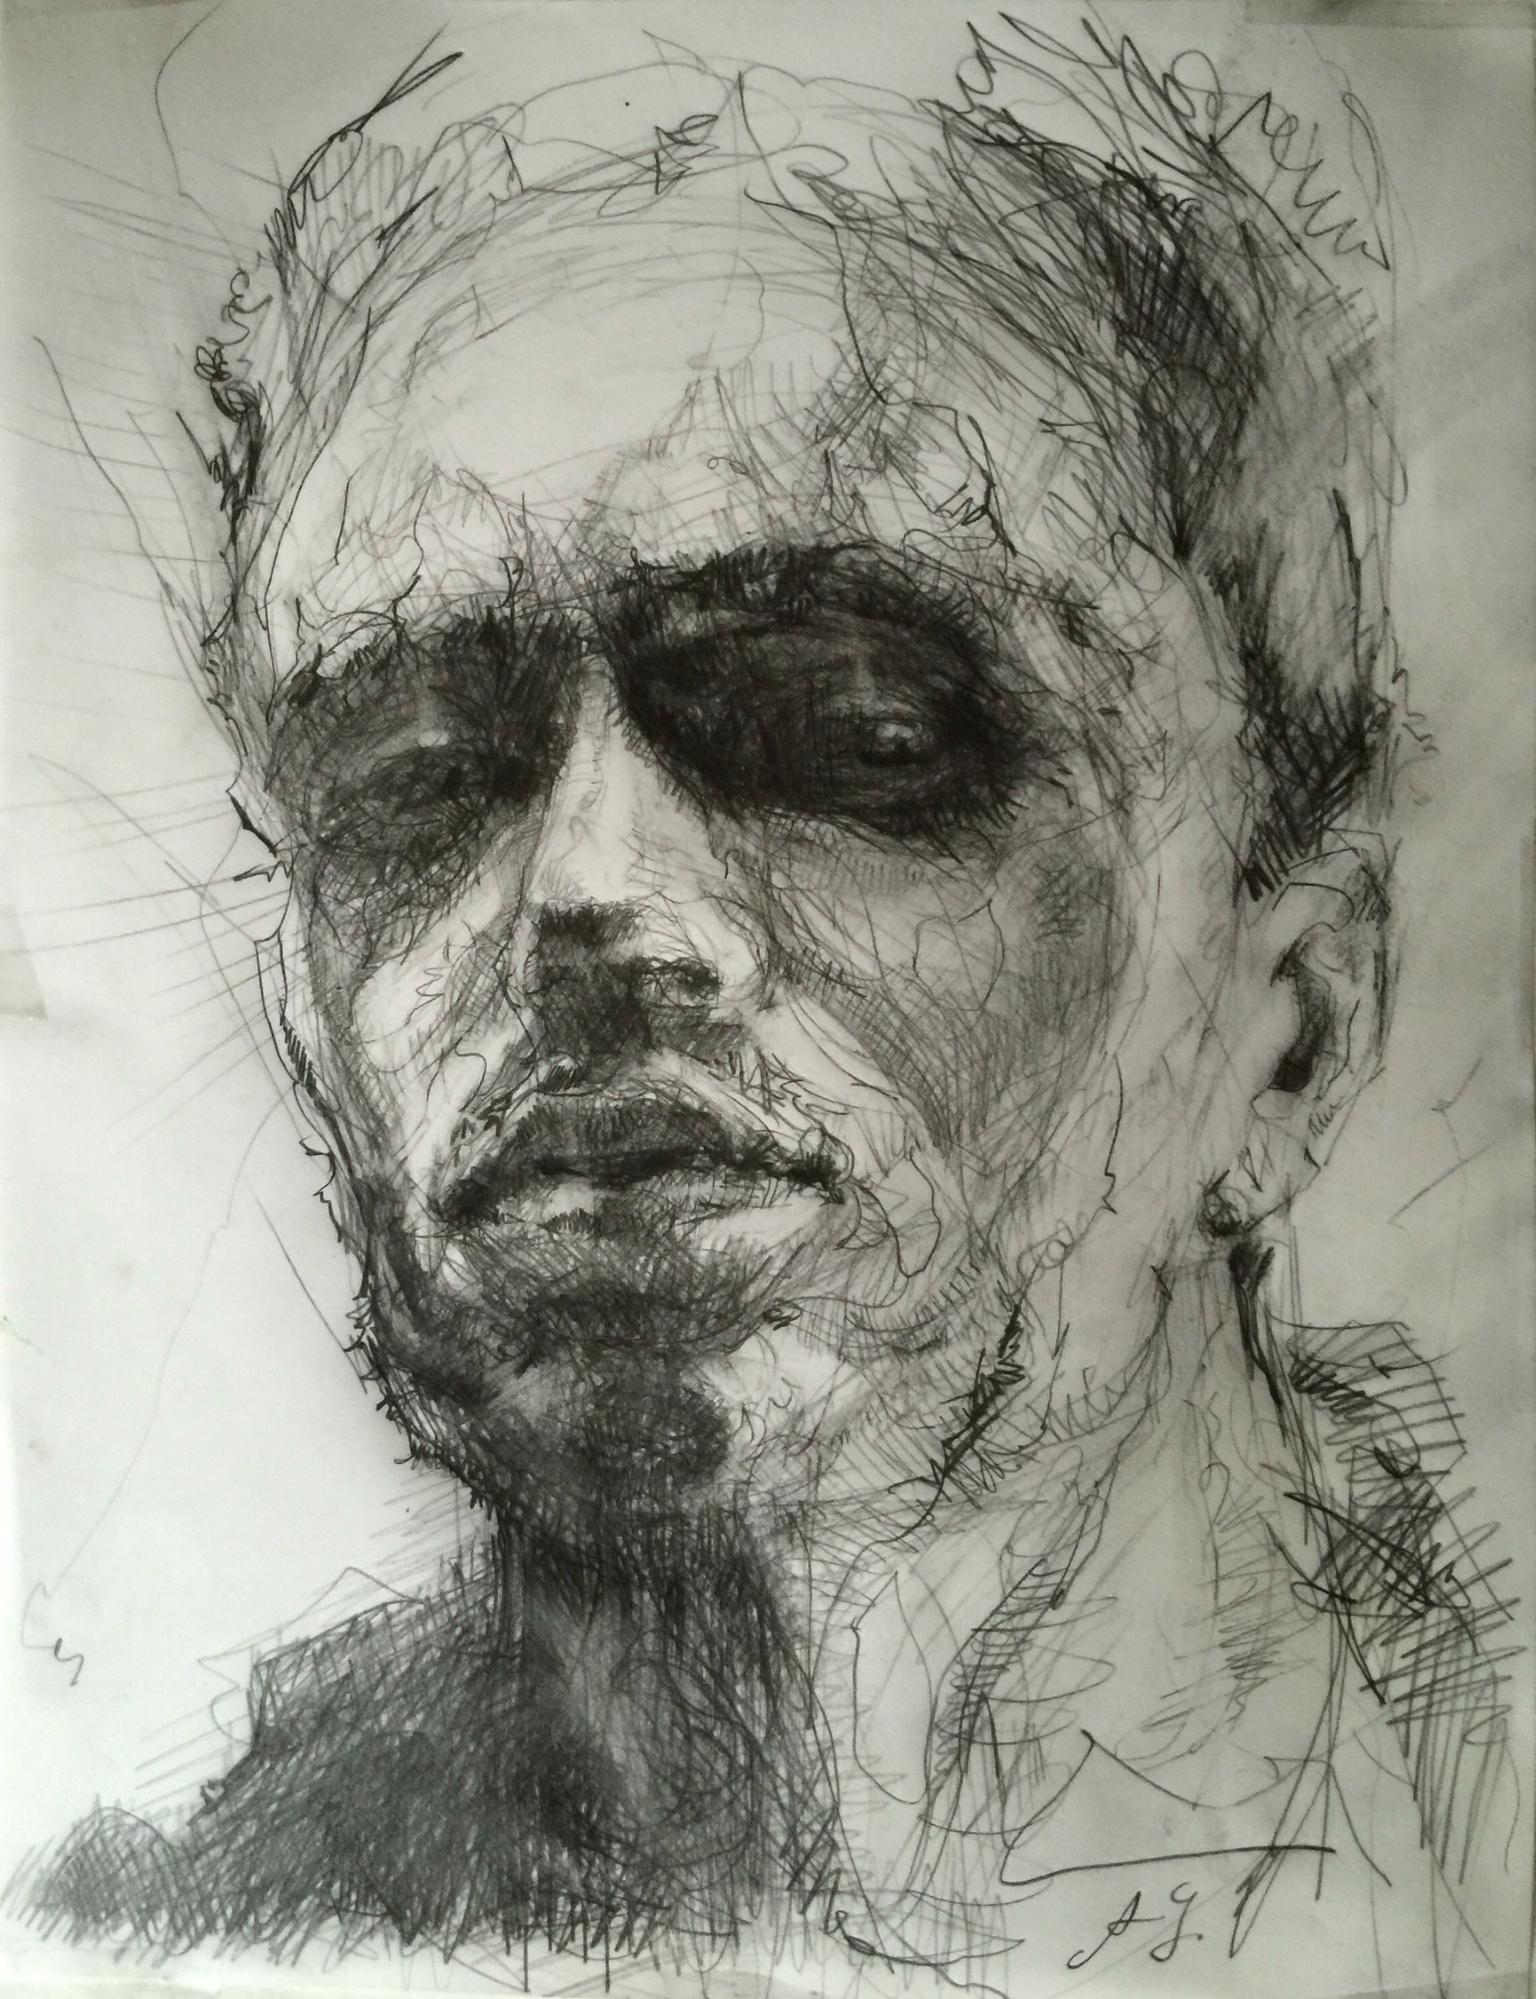 https://realismtoday.com/wp-content/uploads/2019/12/Agnes-Grochulska-graphite-portrait-drawing-17.jpg